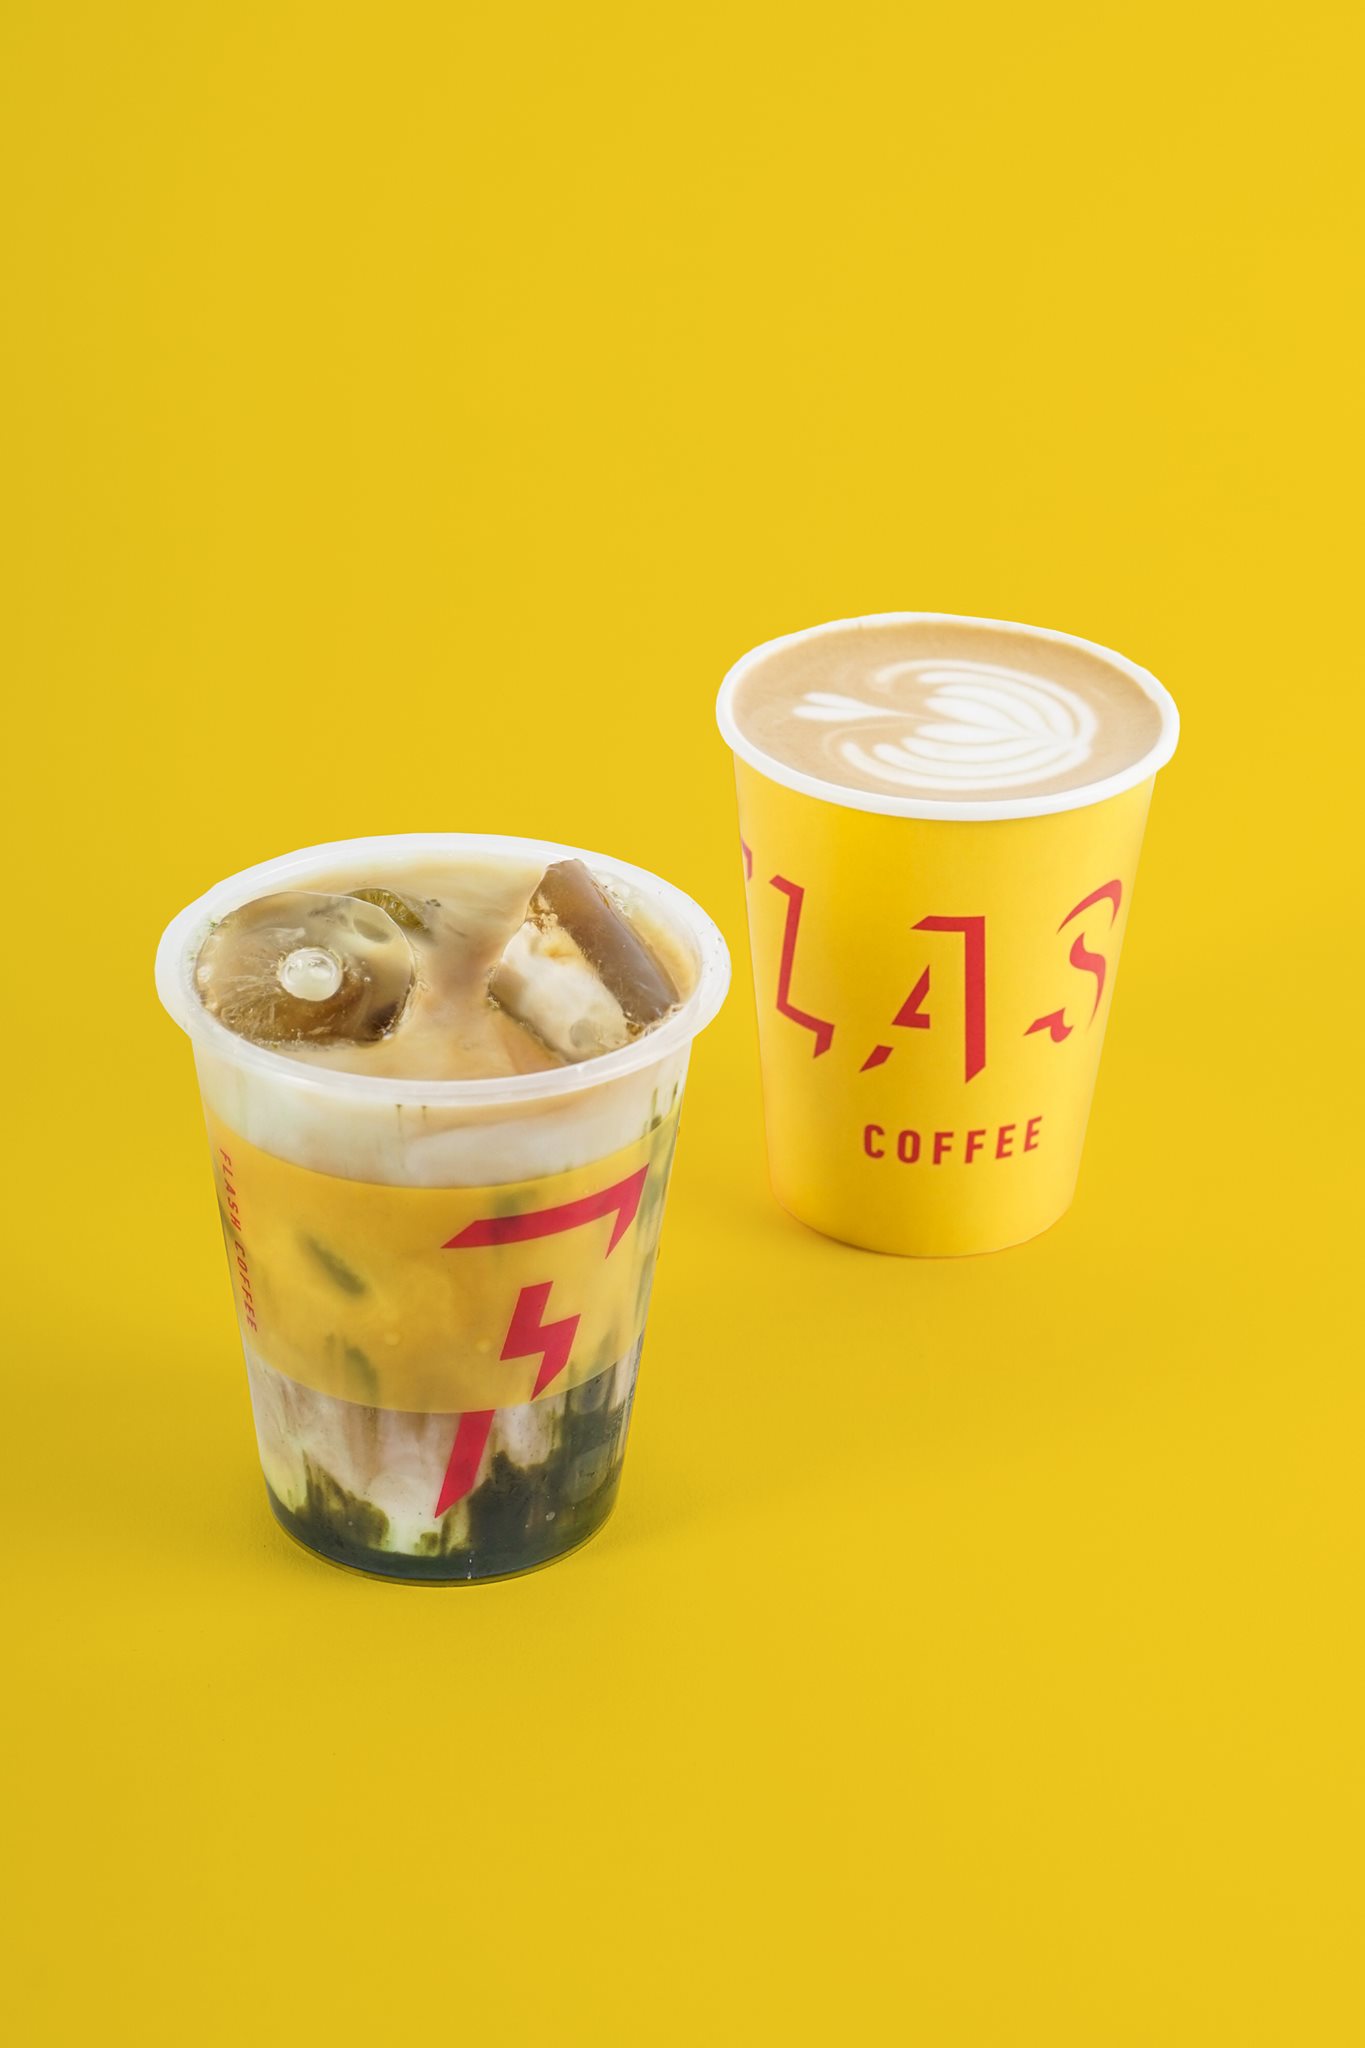 Flash Coffee (Marina Bay Link Mall) - Dine, Shop, Earn